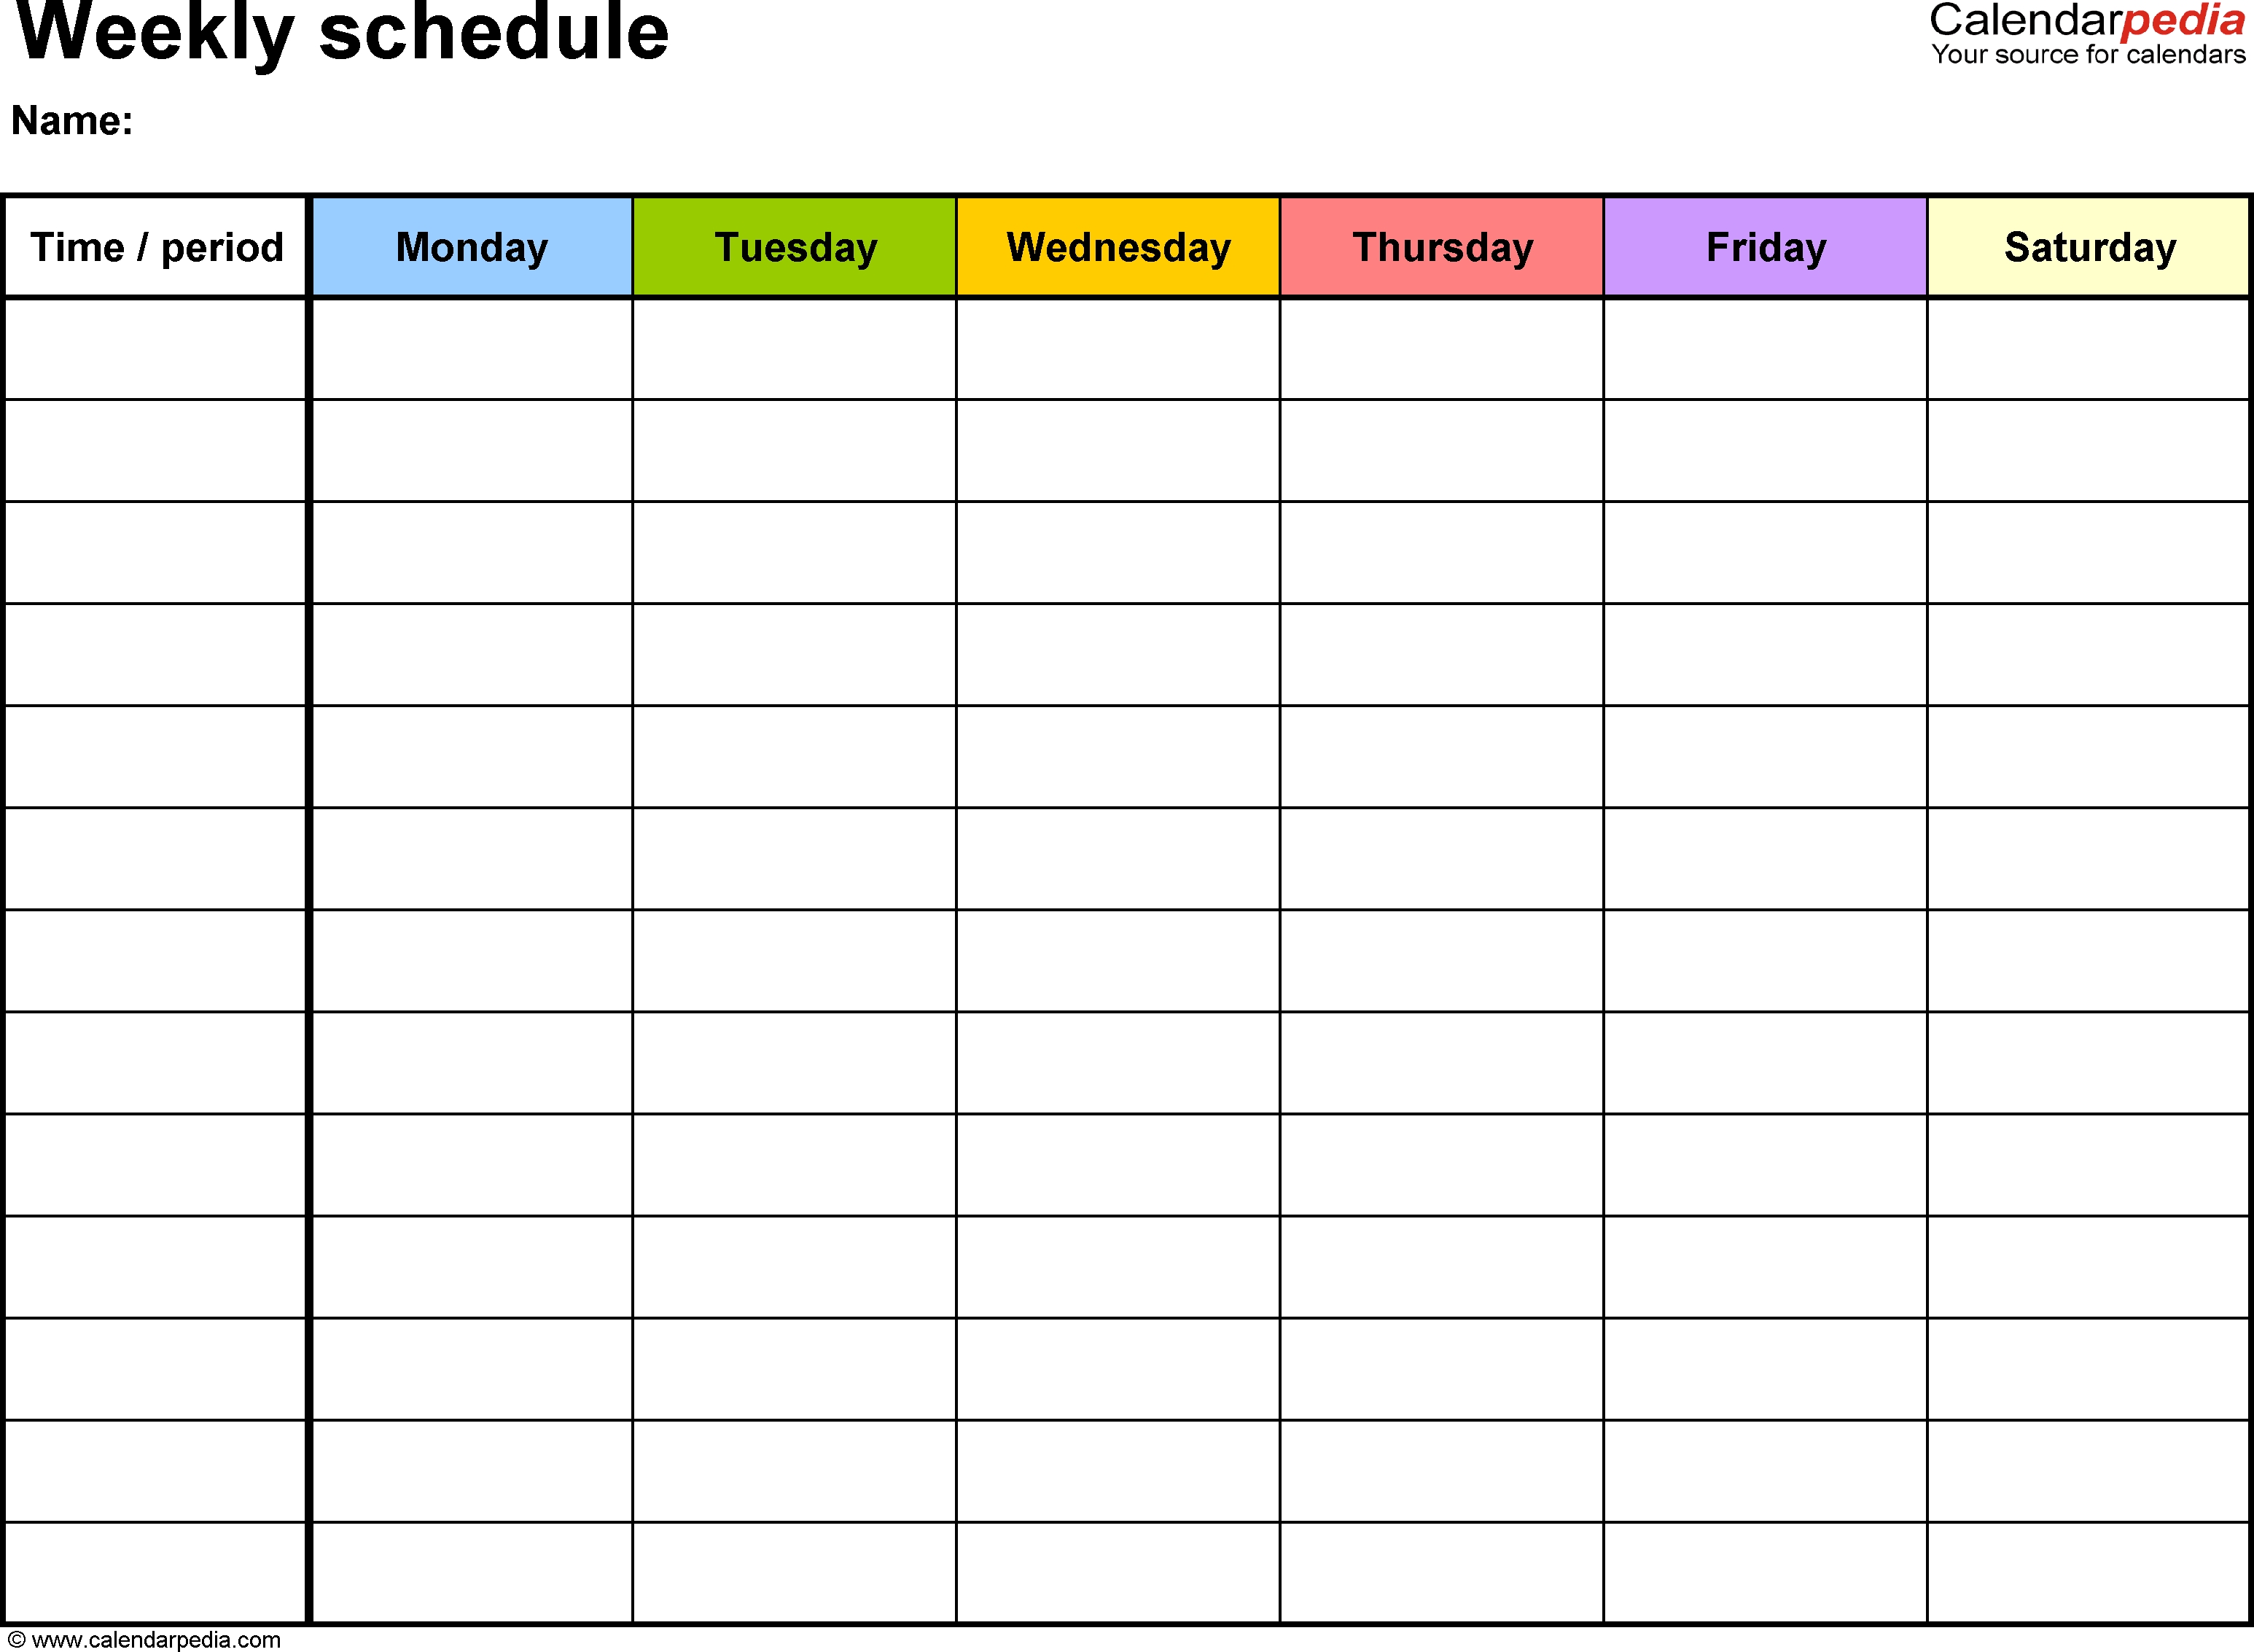 Free Weekly Schedule Templates For Word - 18 Templates One Week Calendar Printable Blank